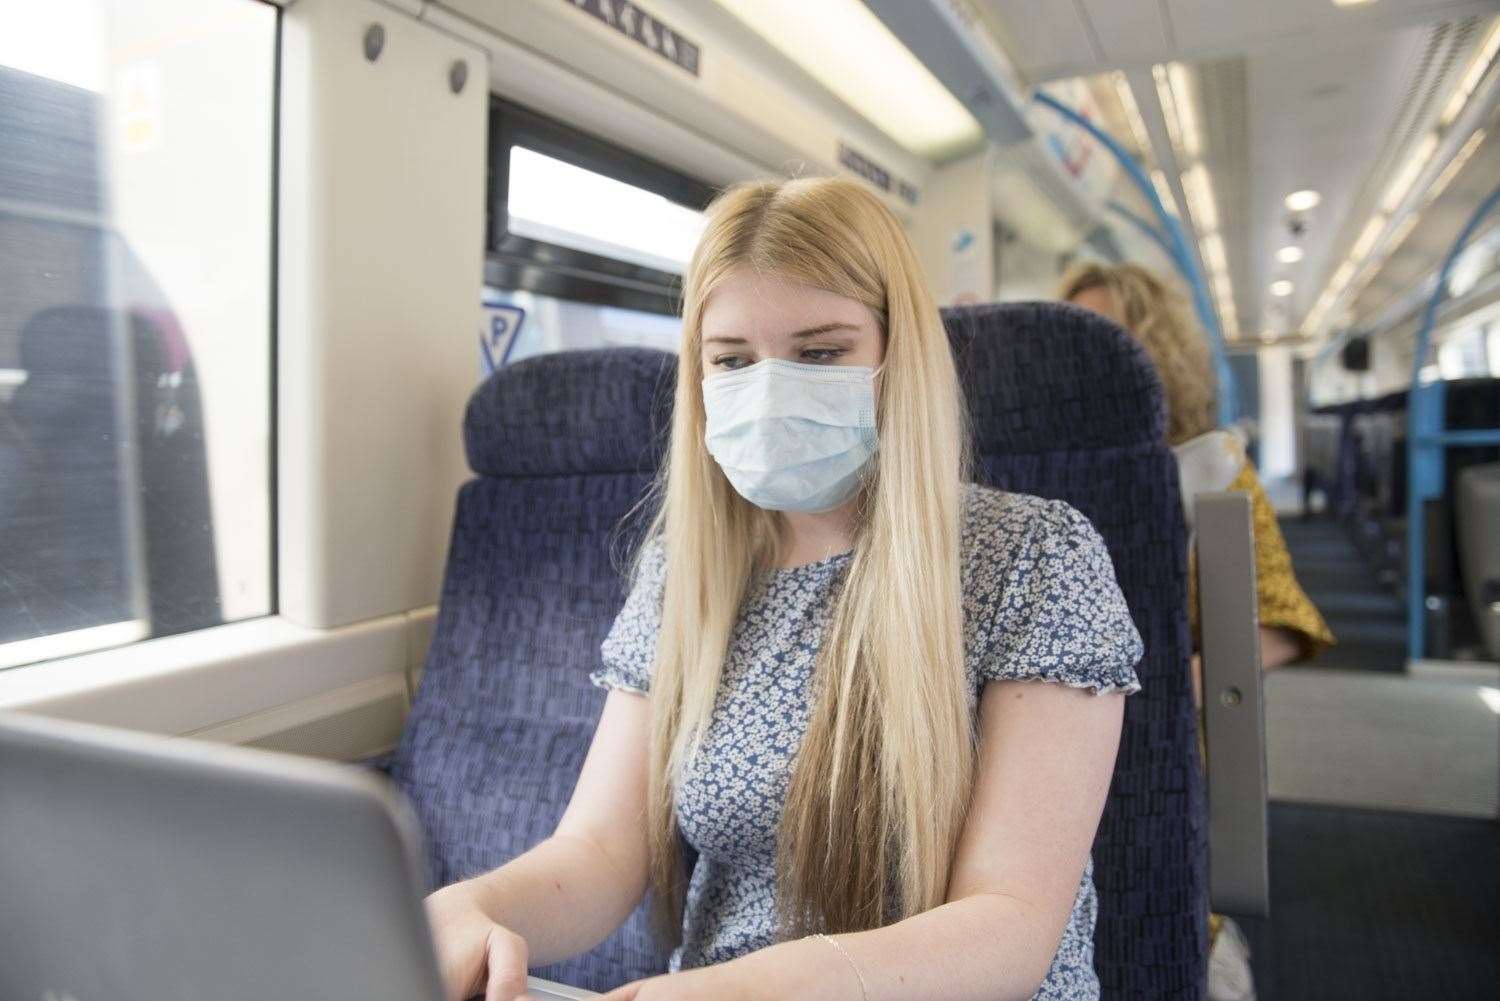 A Southeastern passenger wearing a face mask